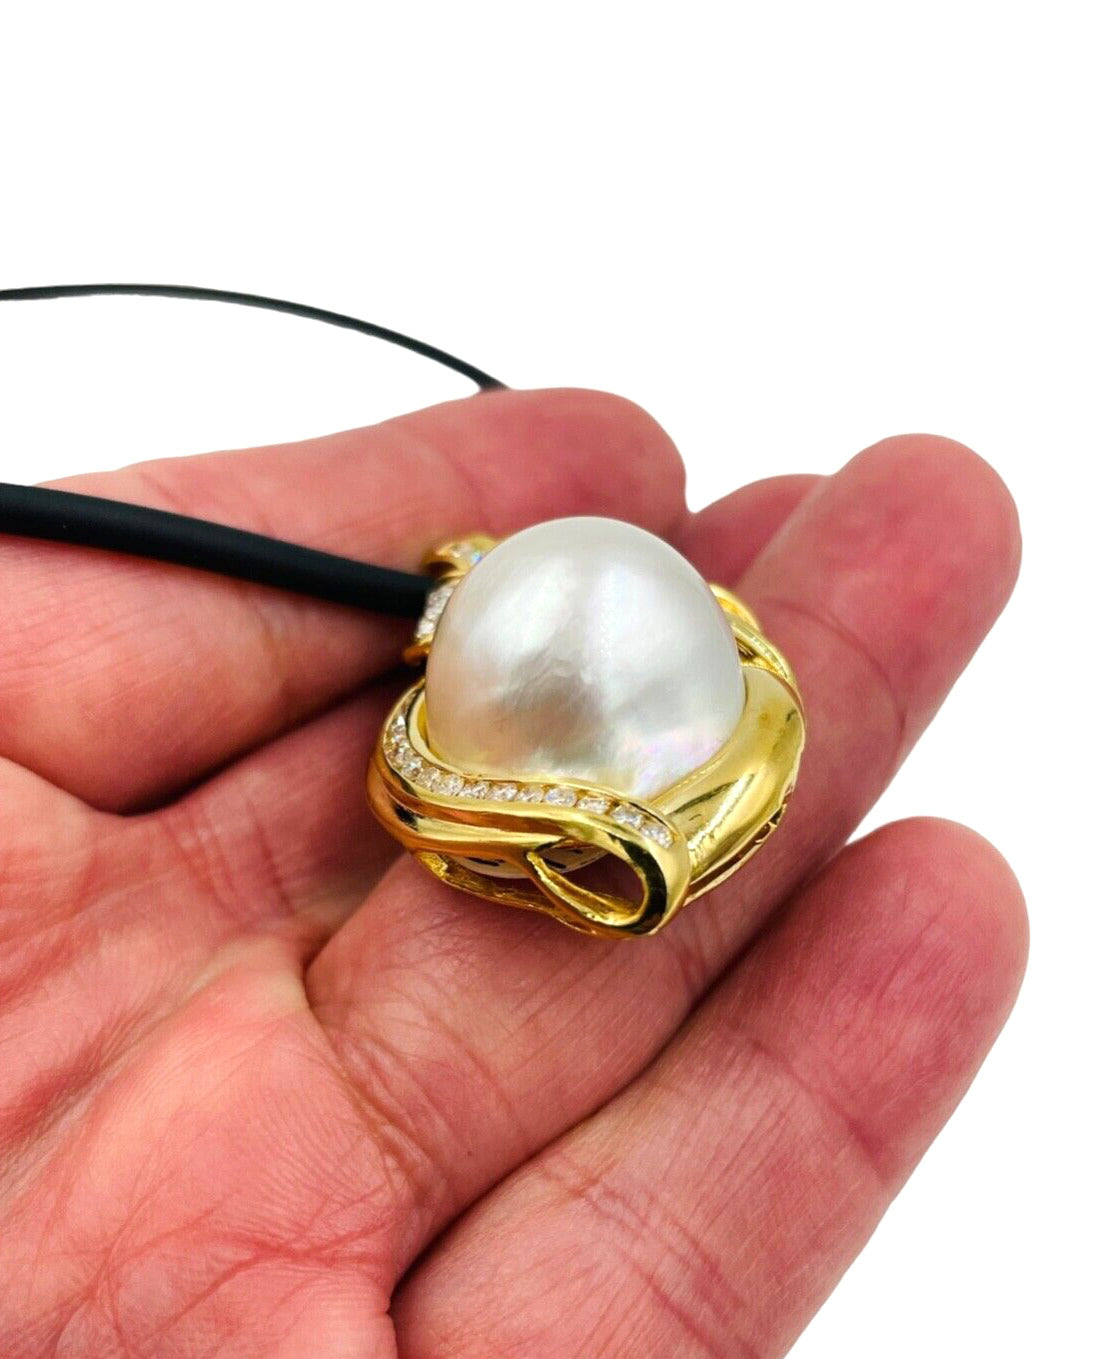 18k Yellow Gold Mabe Pearl & Diamond Enhancer Pendant